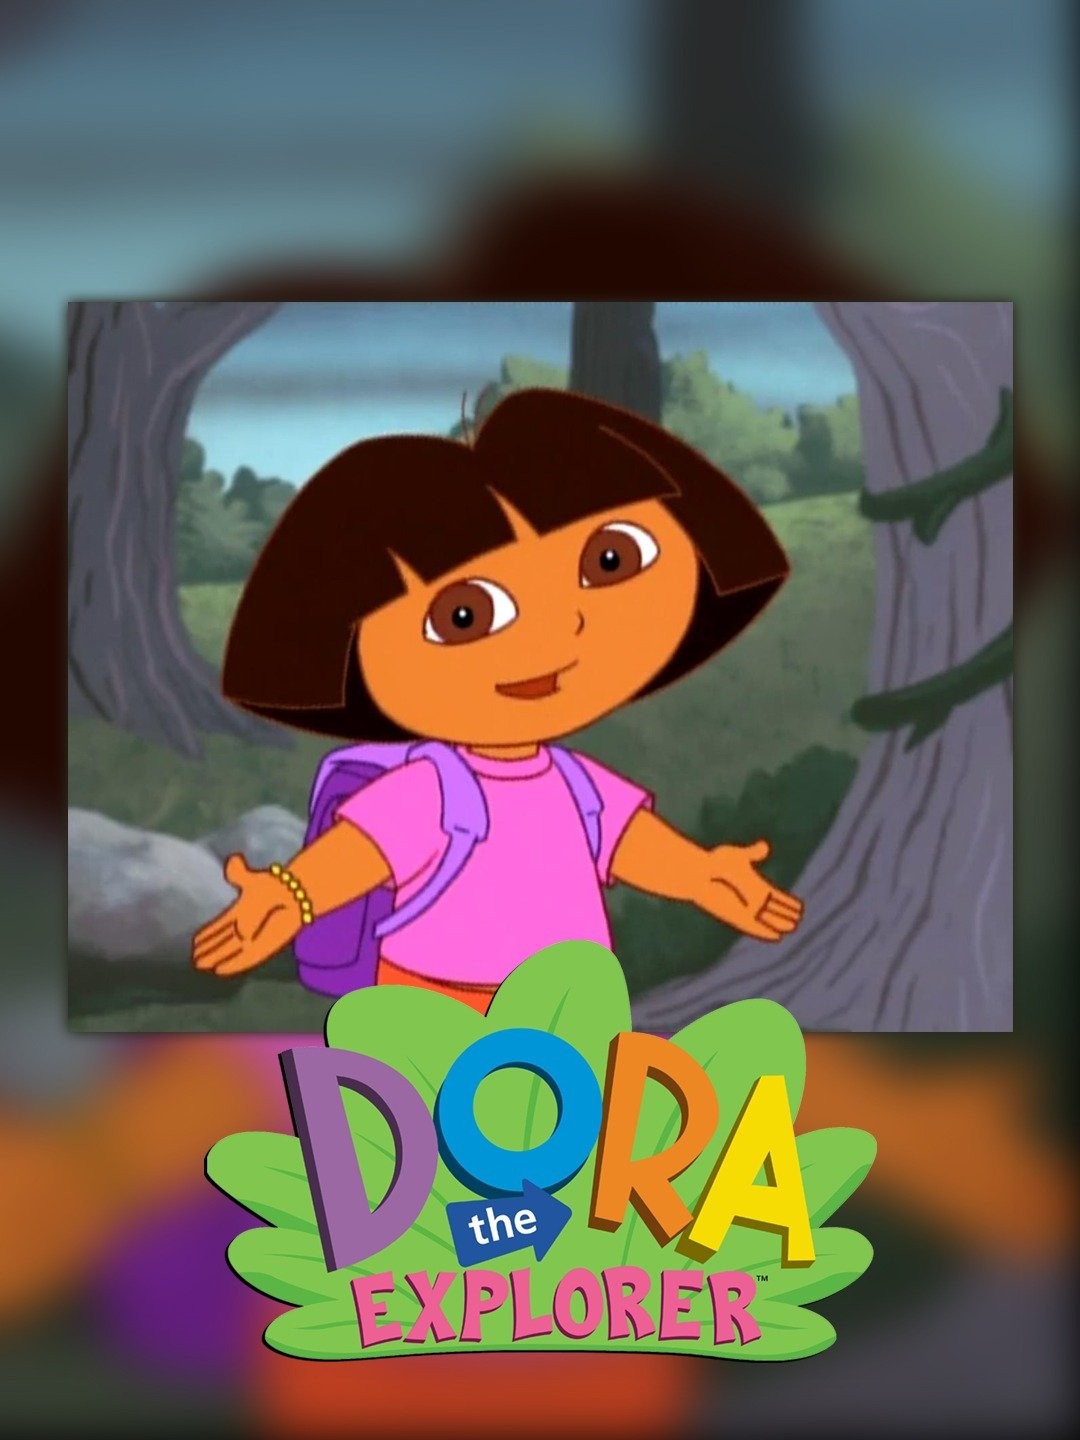 Meme Maker - What's your favorite movie? Dora the explorer I mean